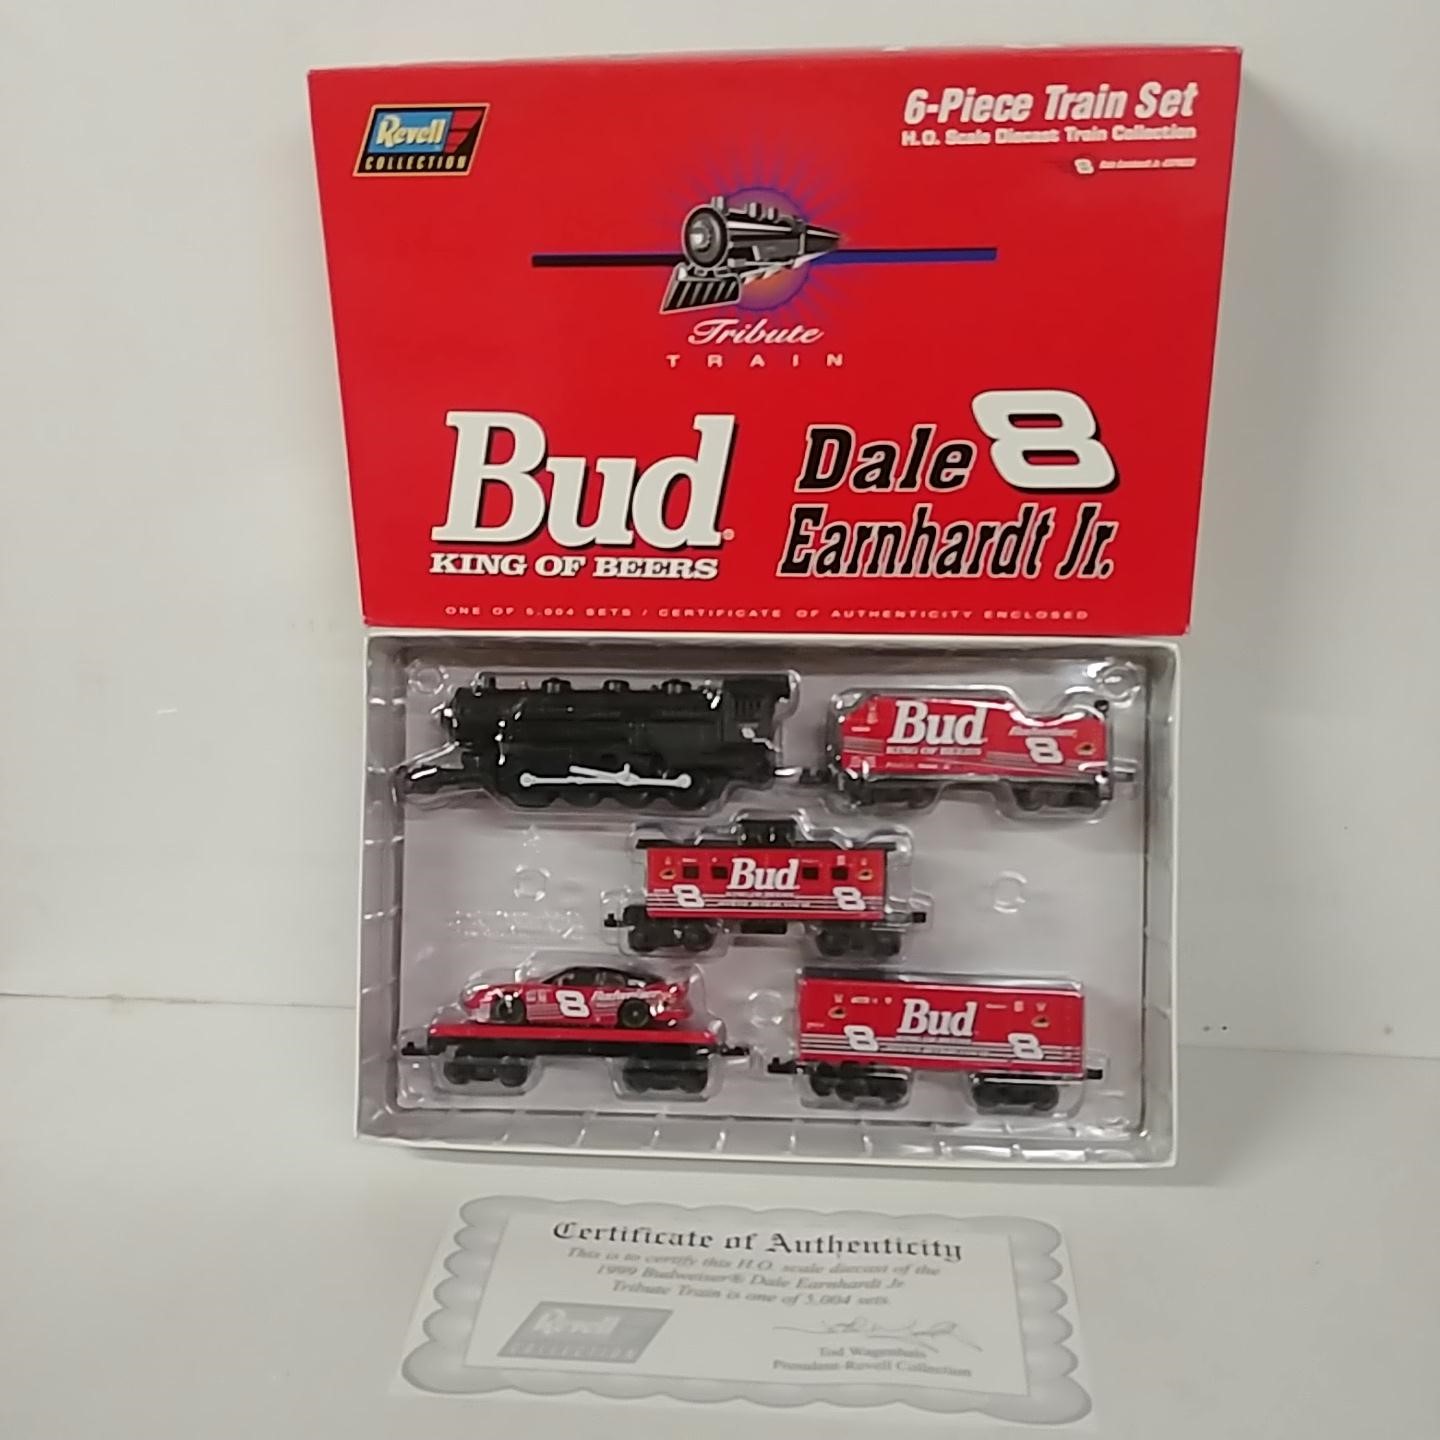 1999 Dale Earnhardt Jr 1/64th Budweiser Train Set